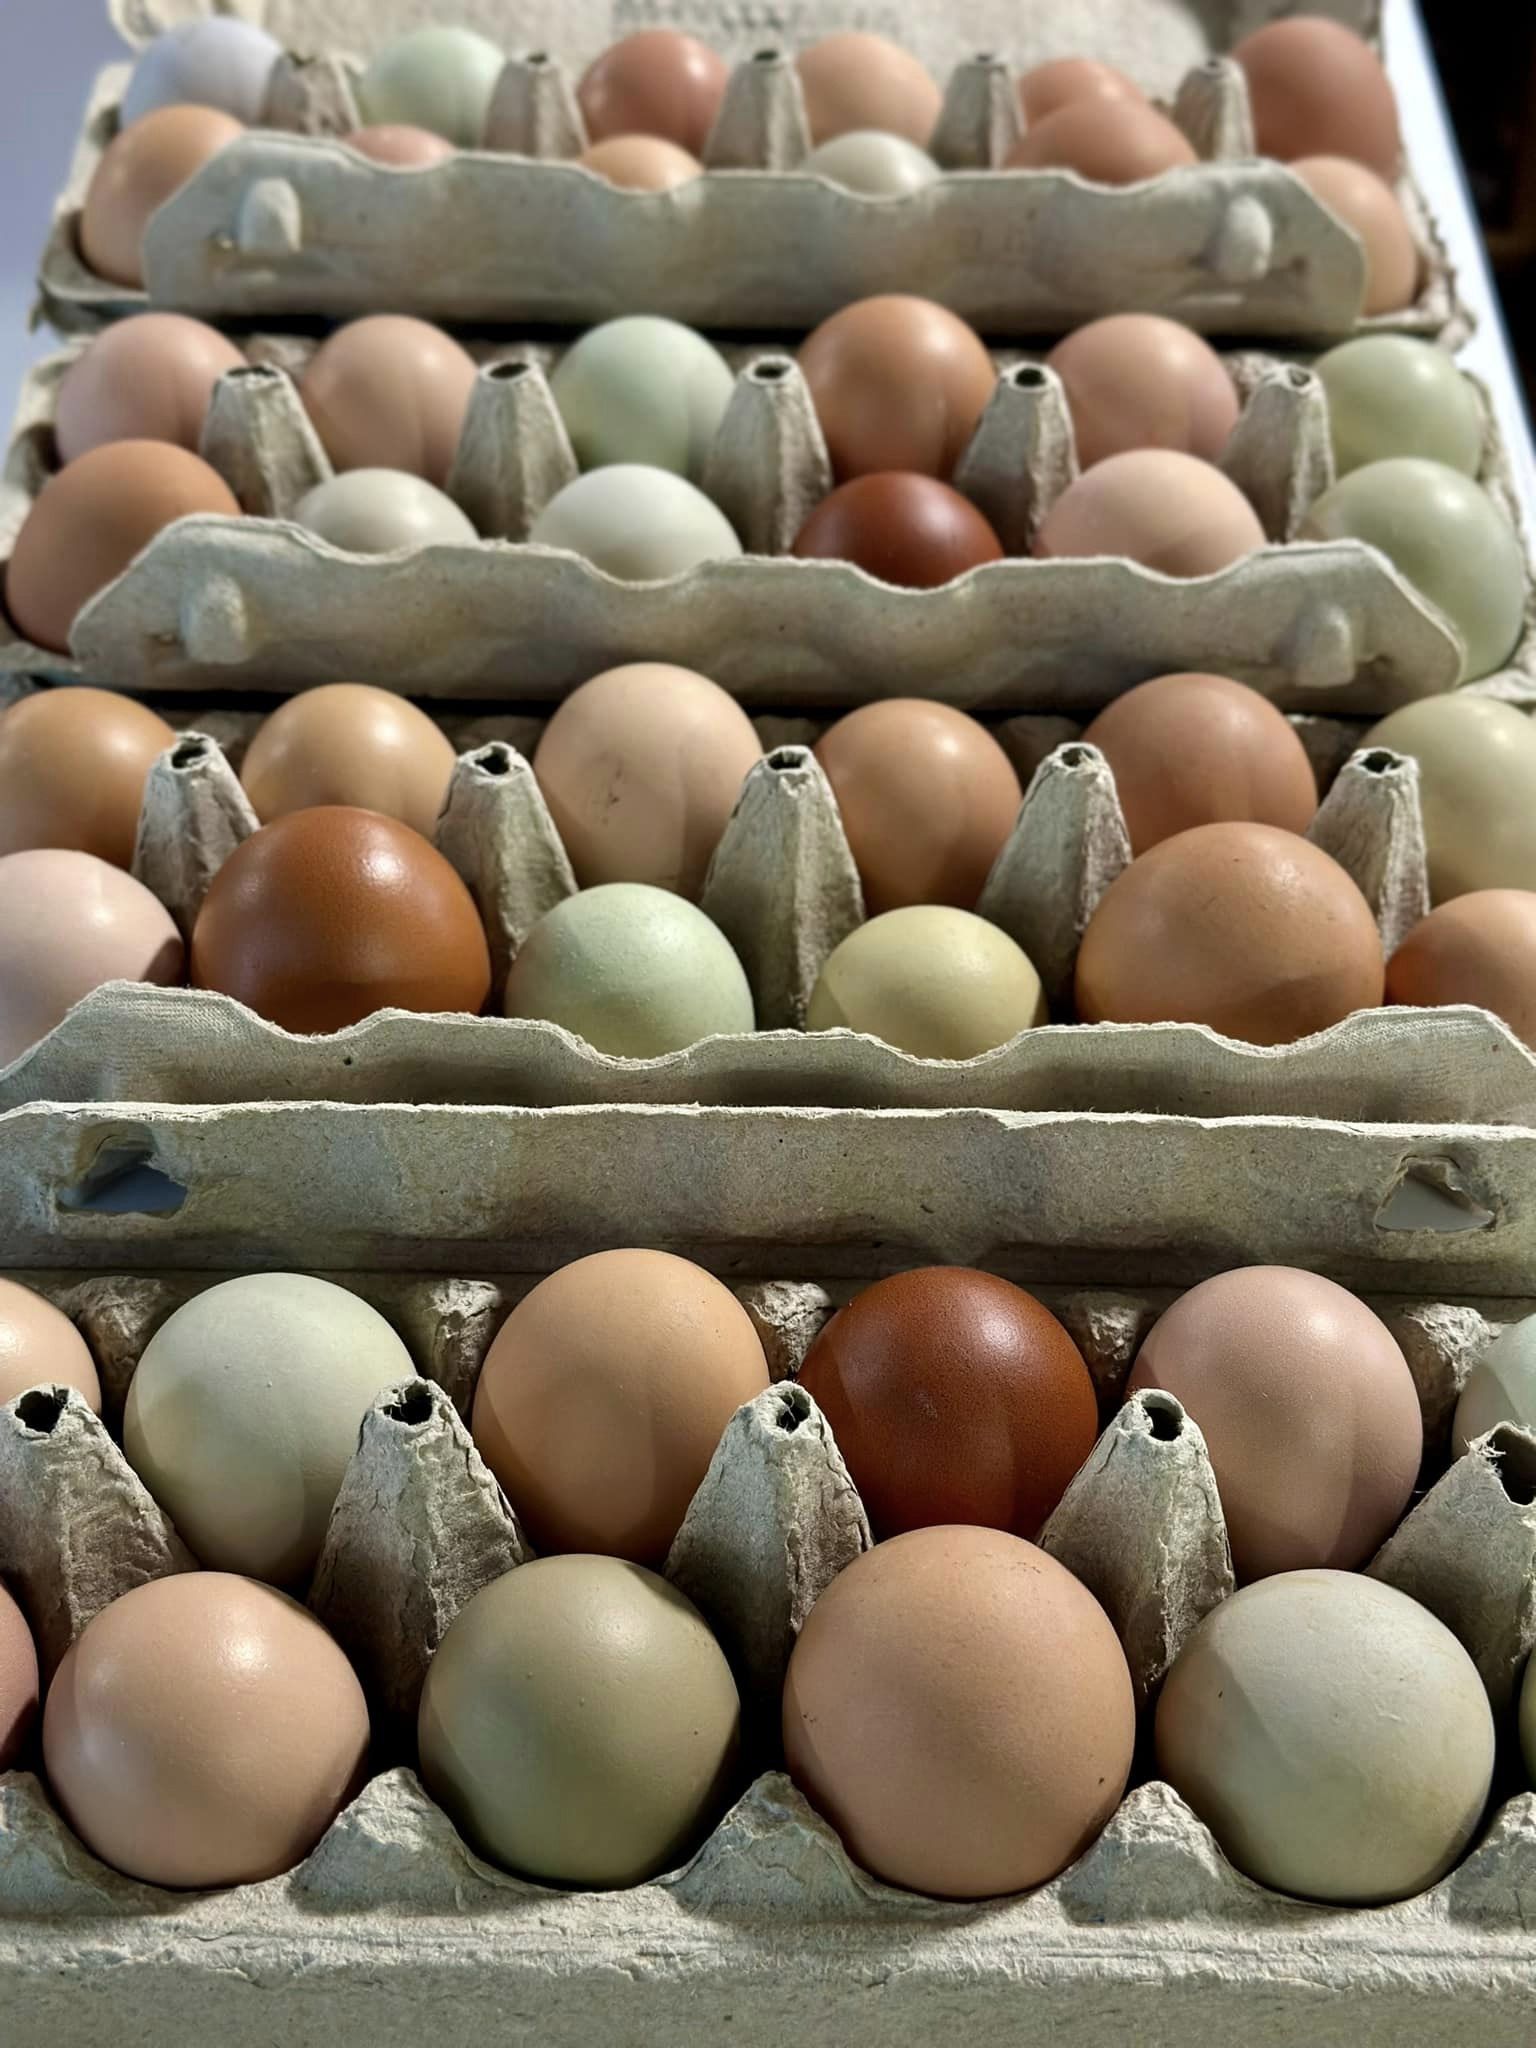 image-996944-Farm_Fresh_Eggs-c51ce.jpg